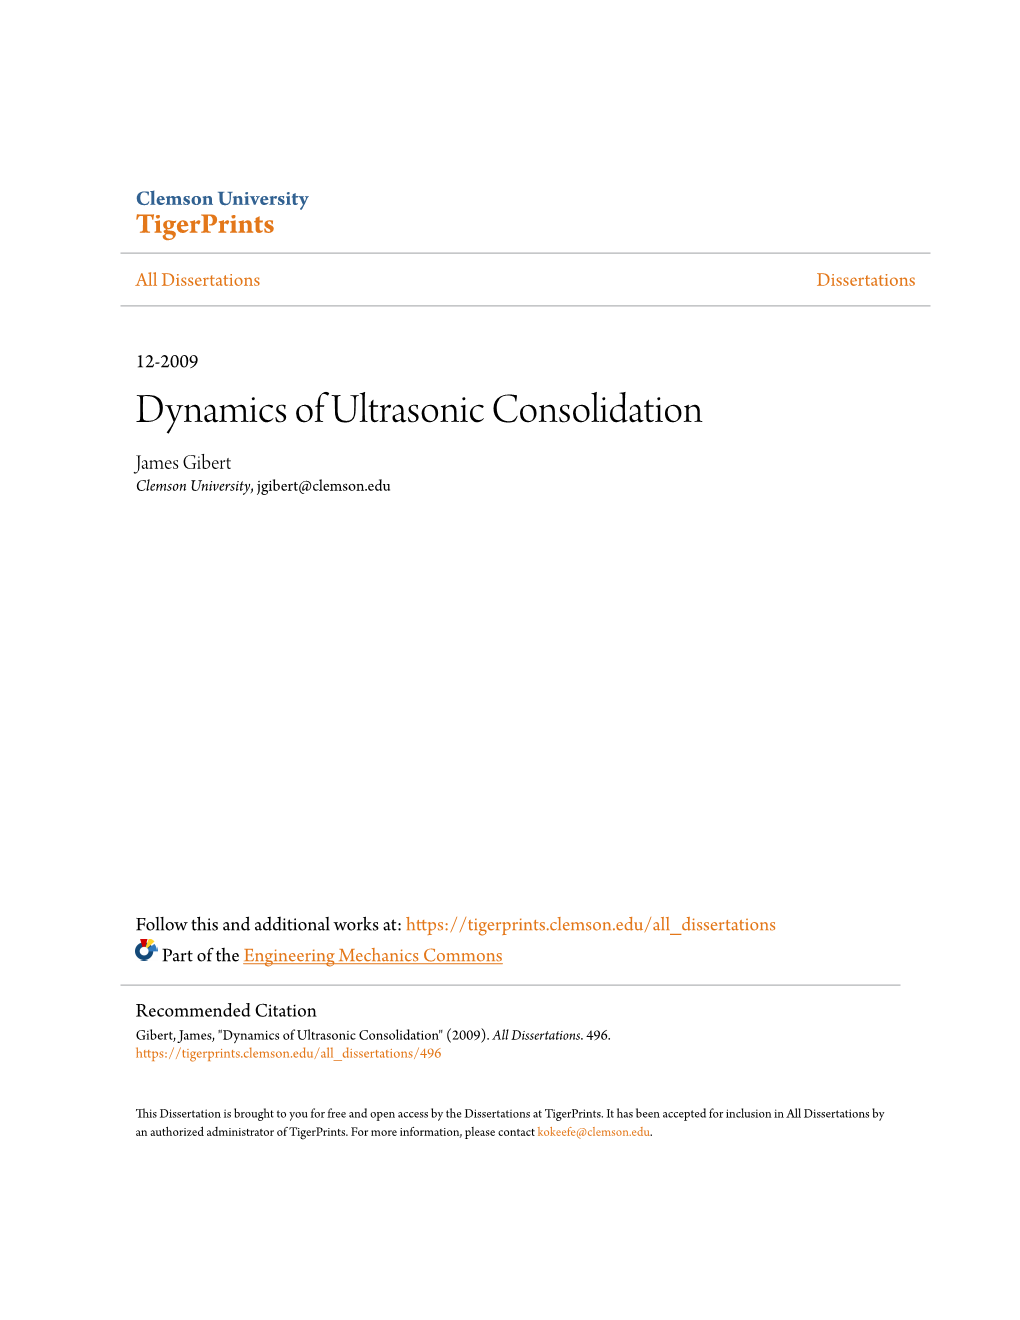 Dynamics of Ultrasonic Consolidation James Gibert Clemson University, Jgibert@Clemson.Edu